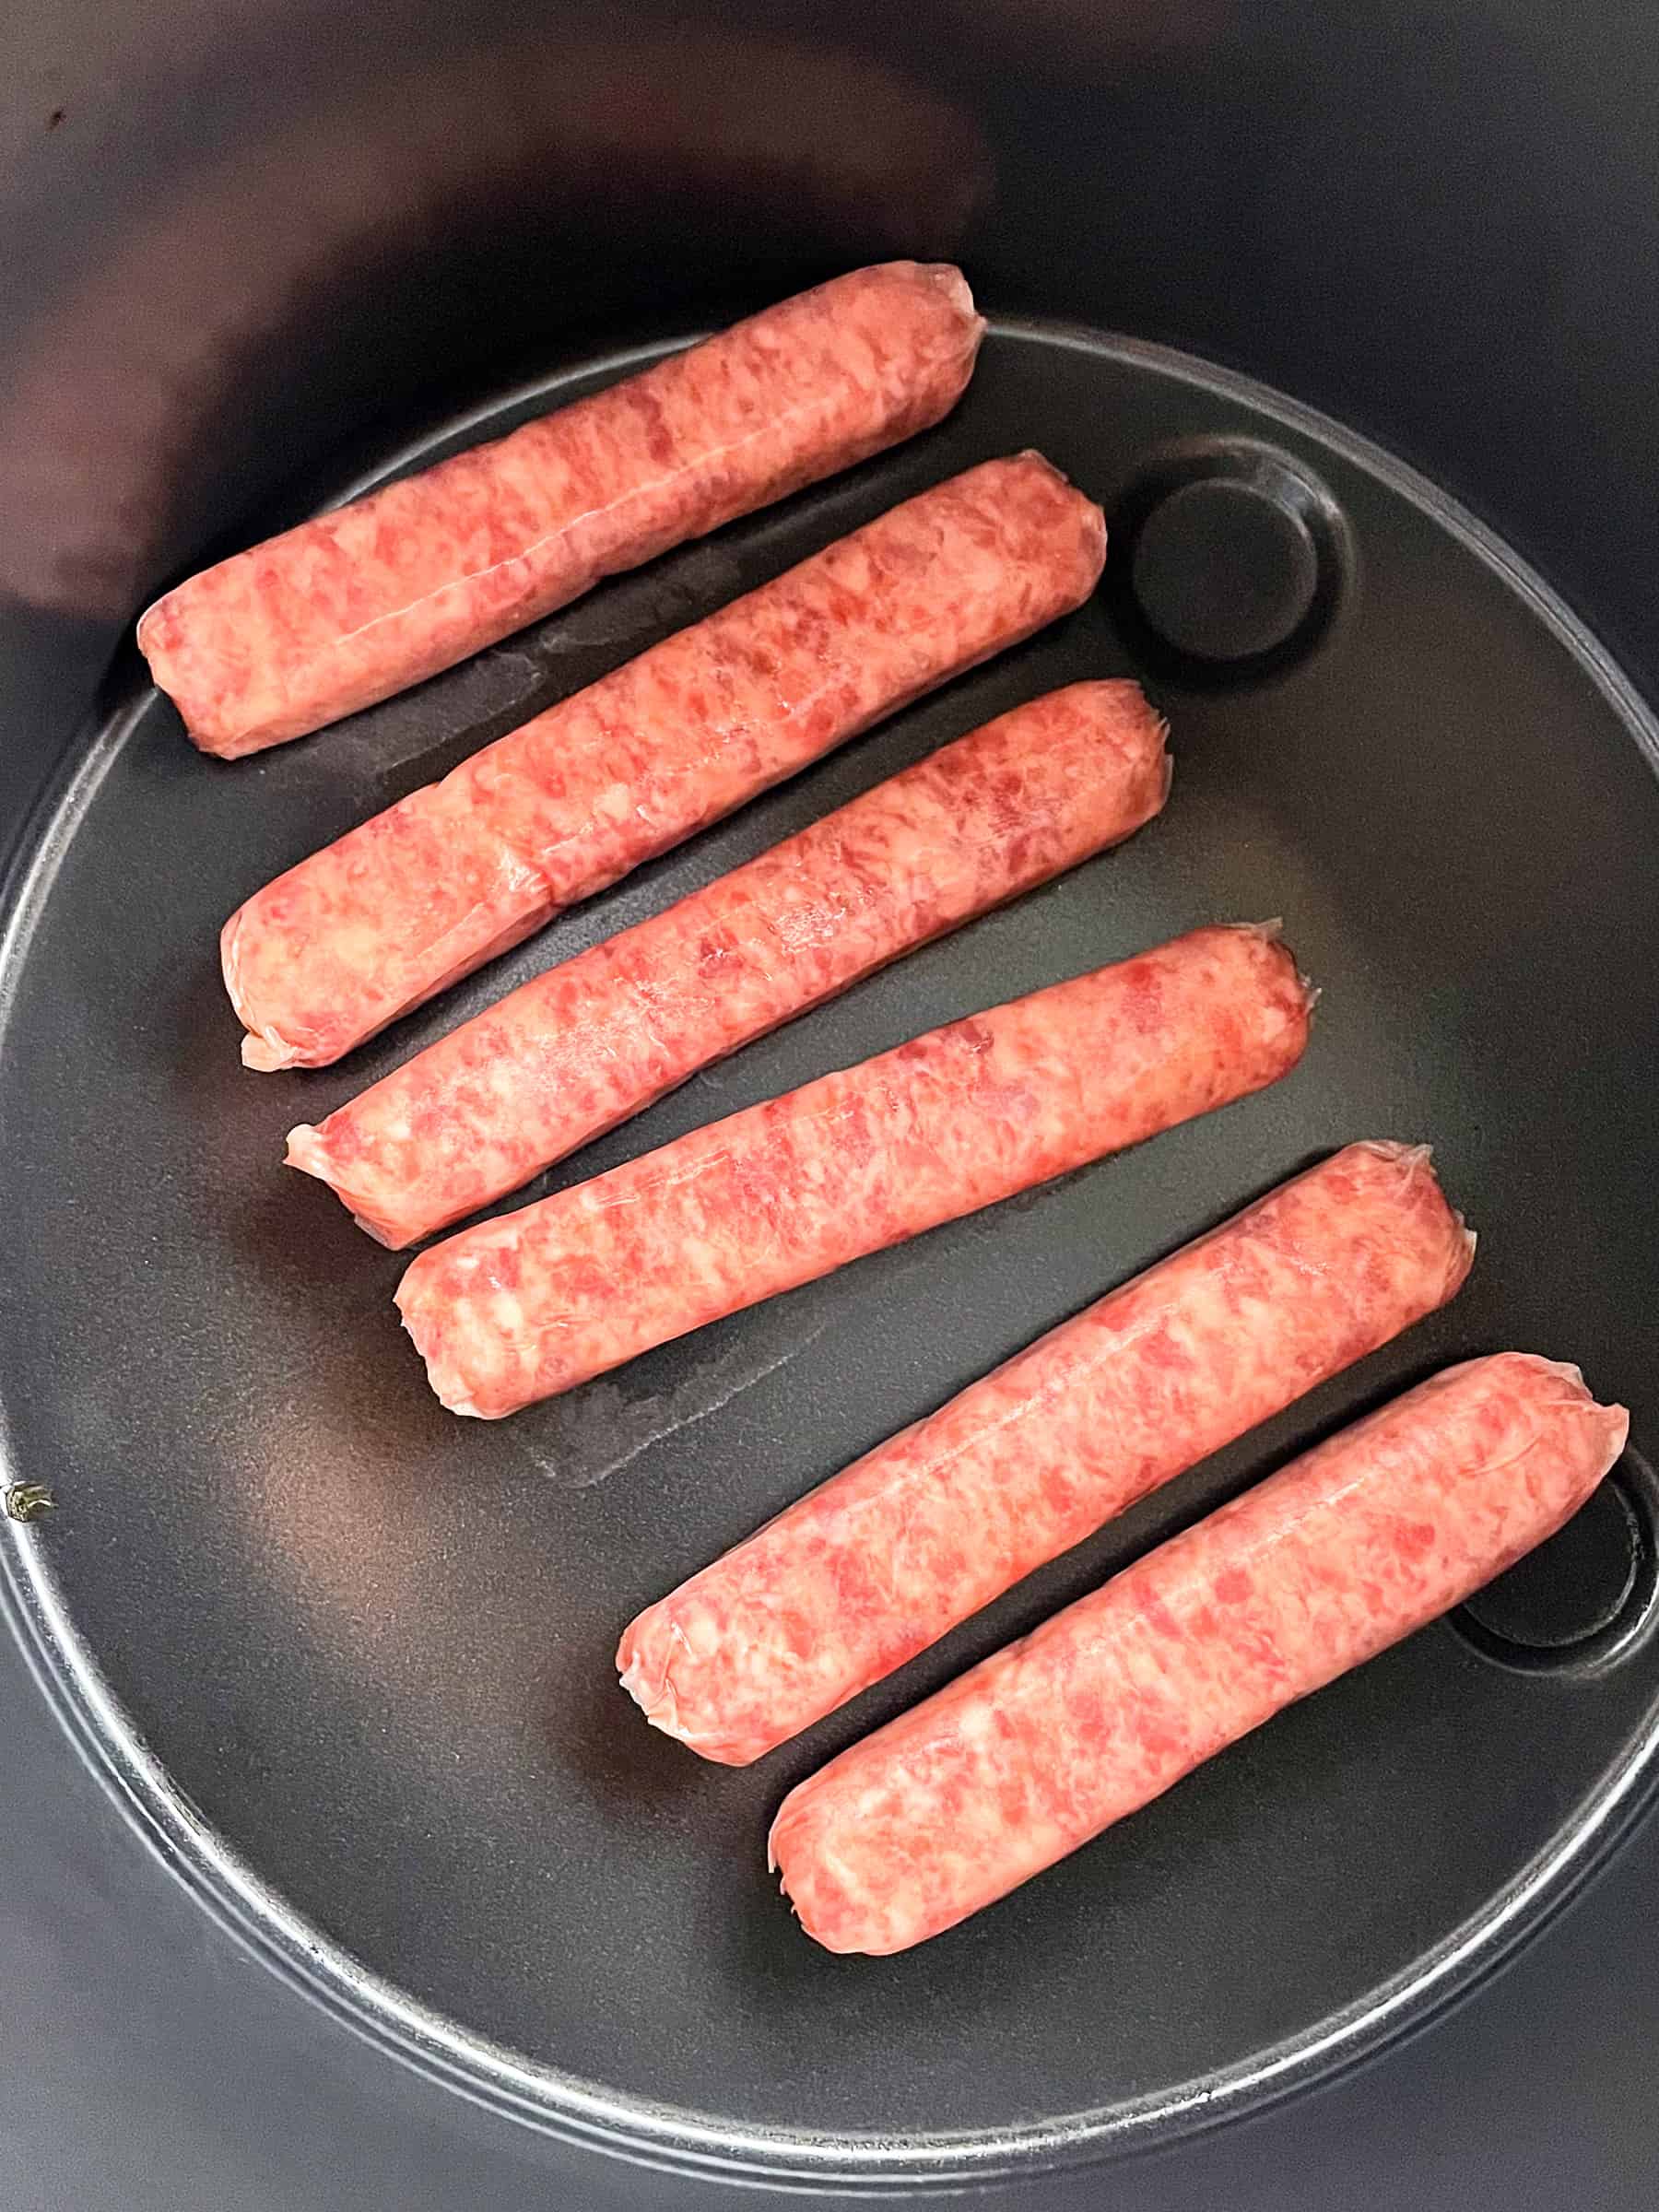 Fresh, uncooked breakfast sausage links in an air fryer pan.